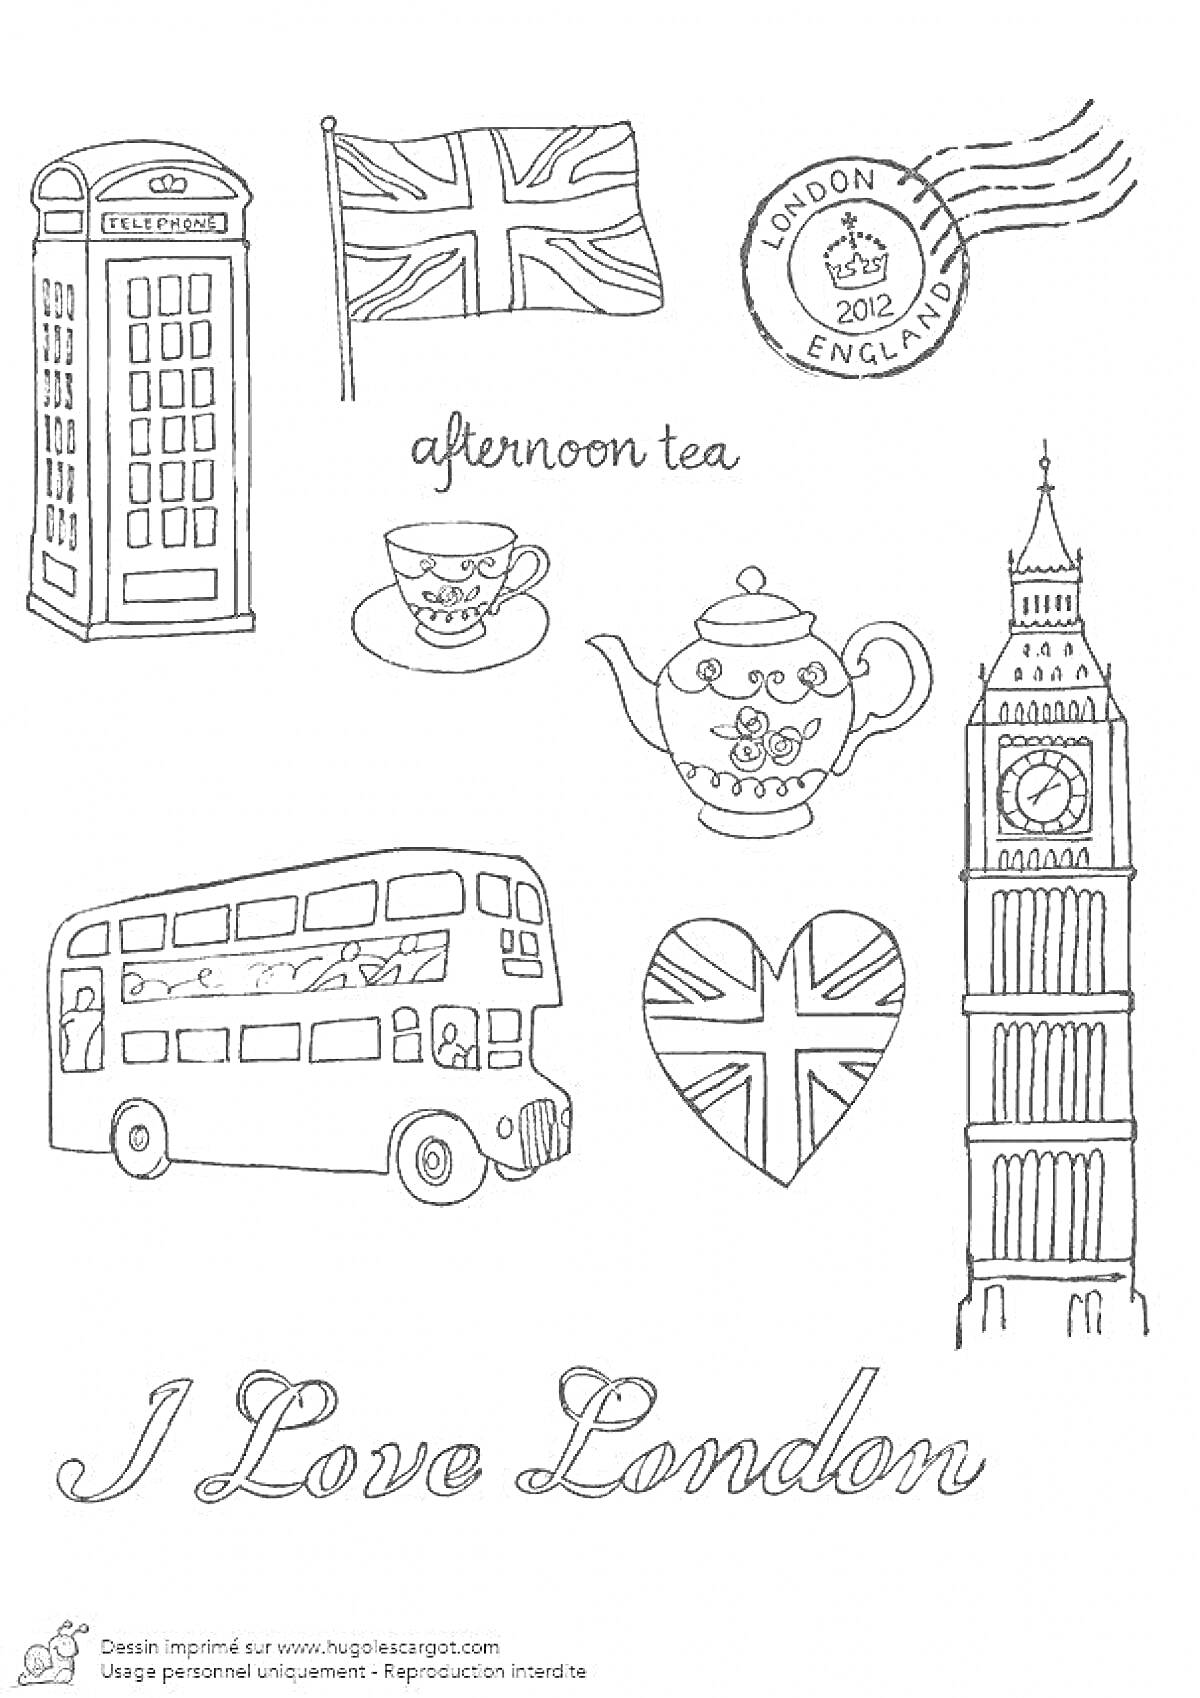 Телефонная будка, автобус, чай, часы, флаг, сердце, надписи 